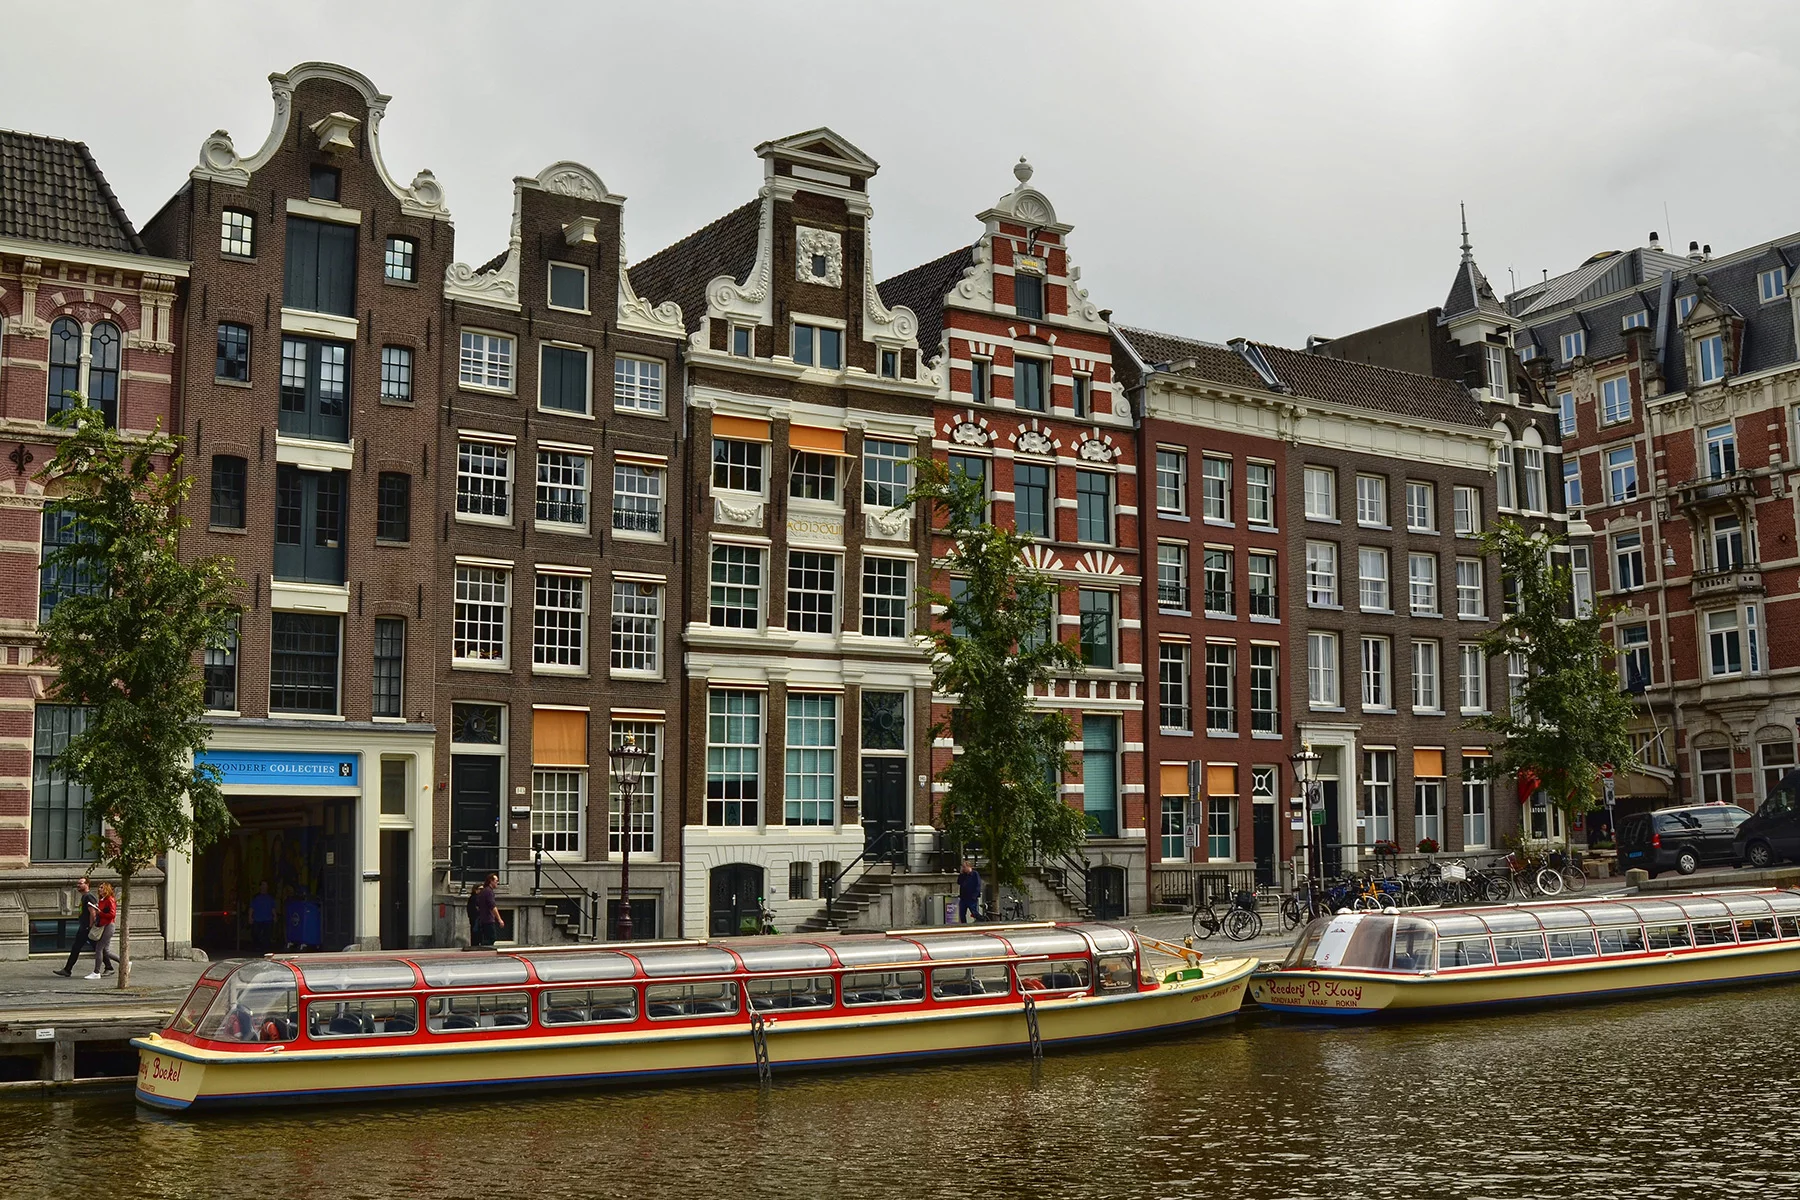 Dutch canal boats